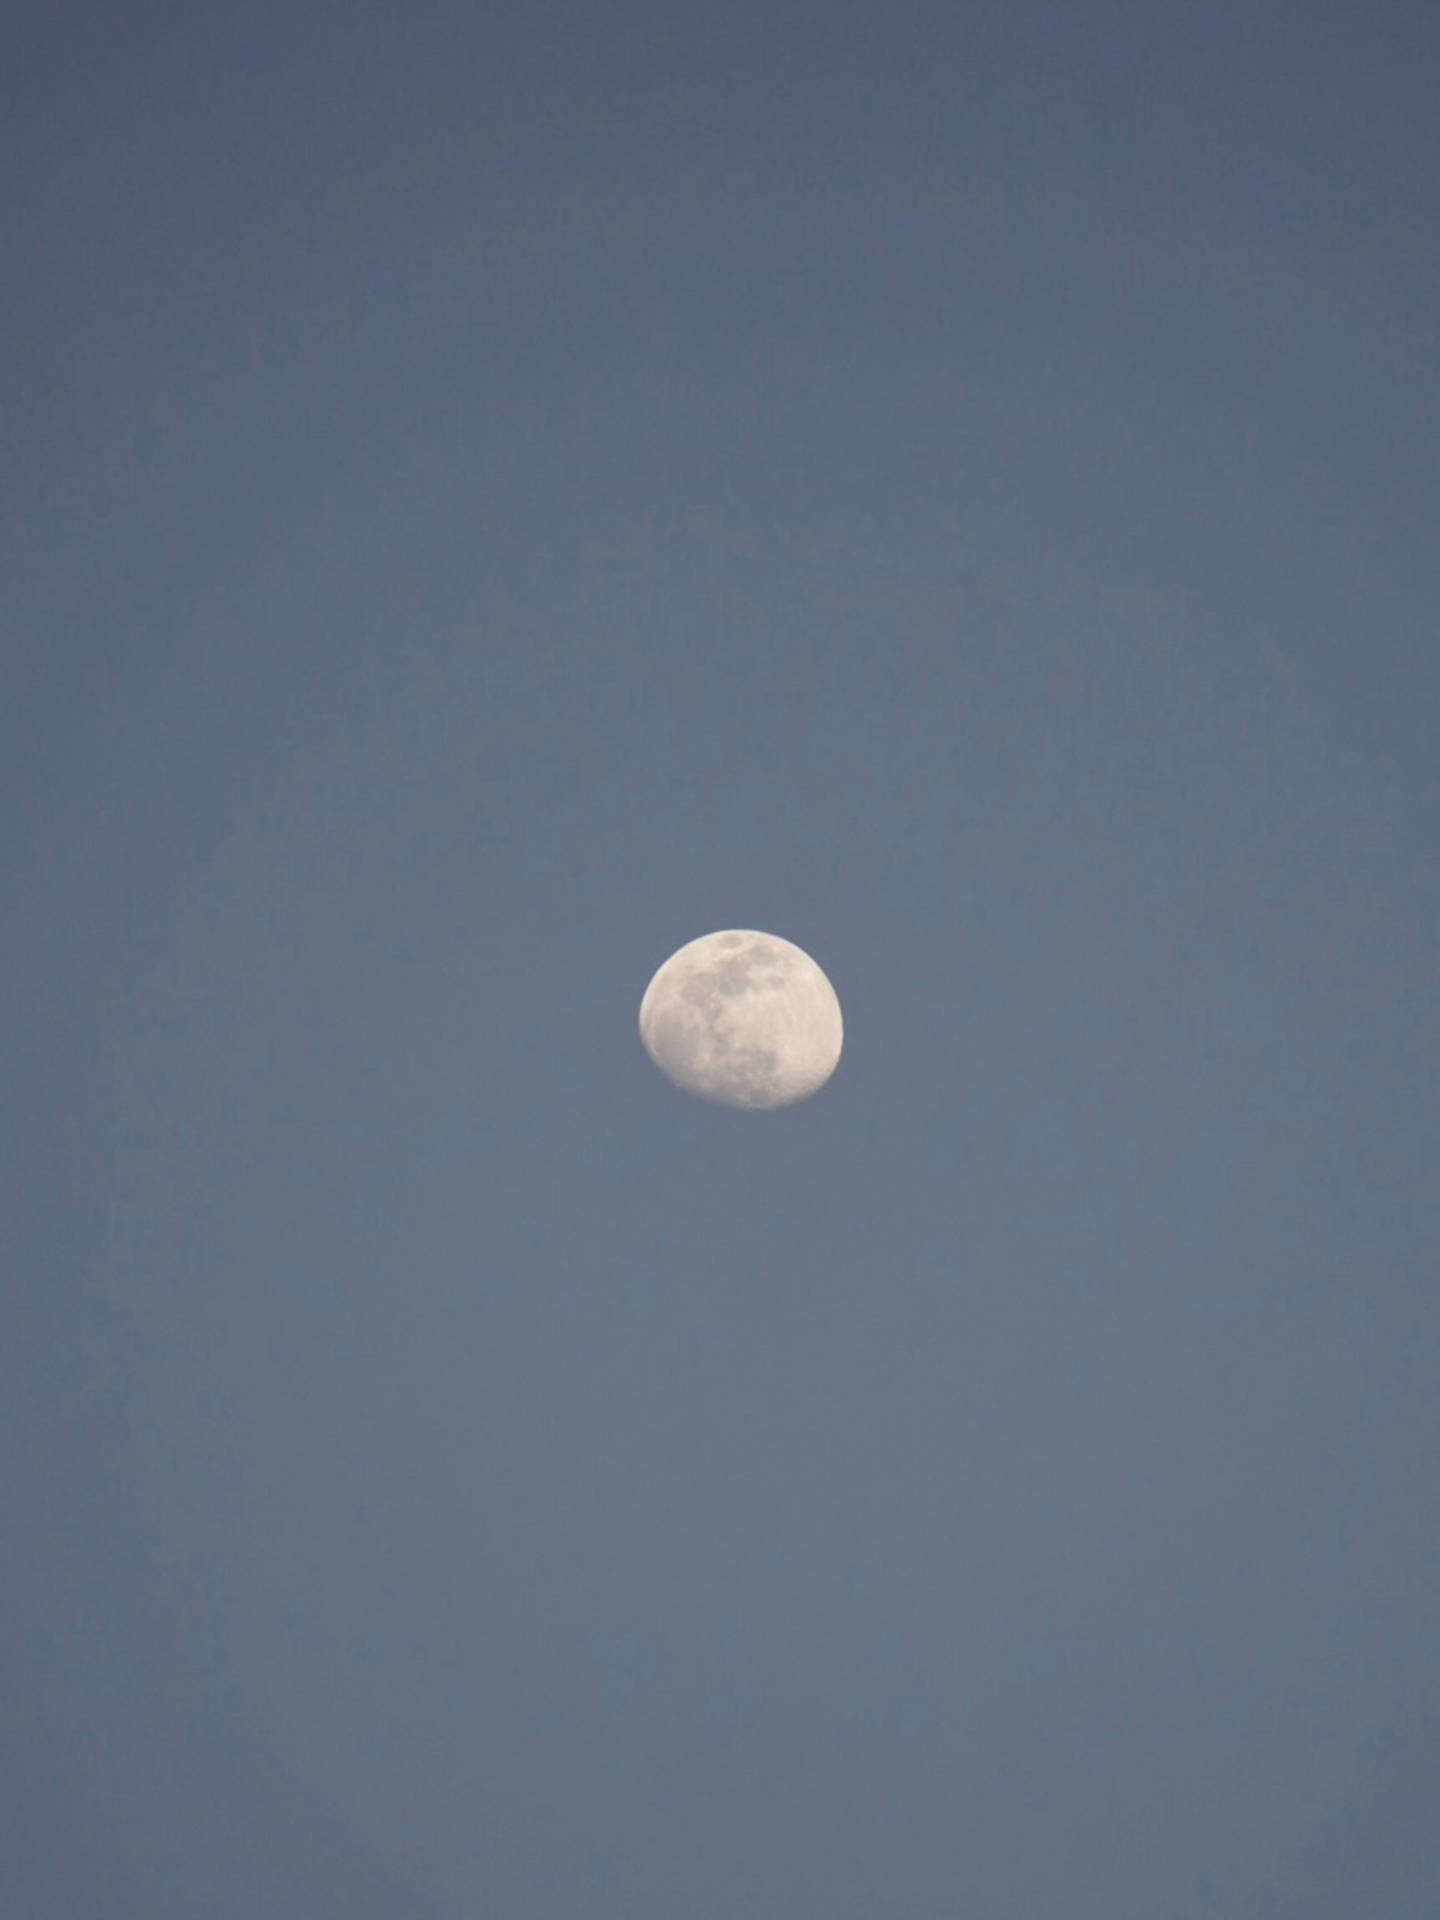 Hd Moon In The Gray Sky